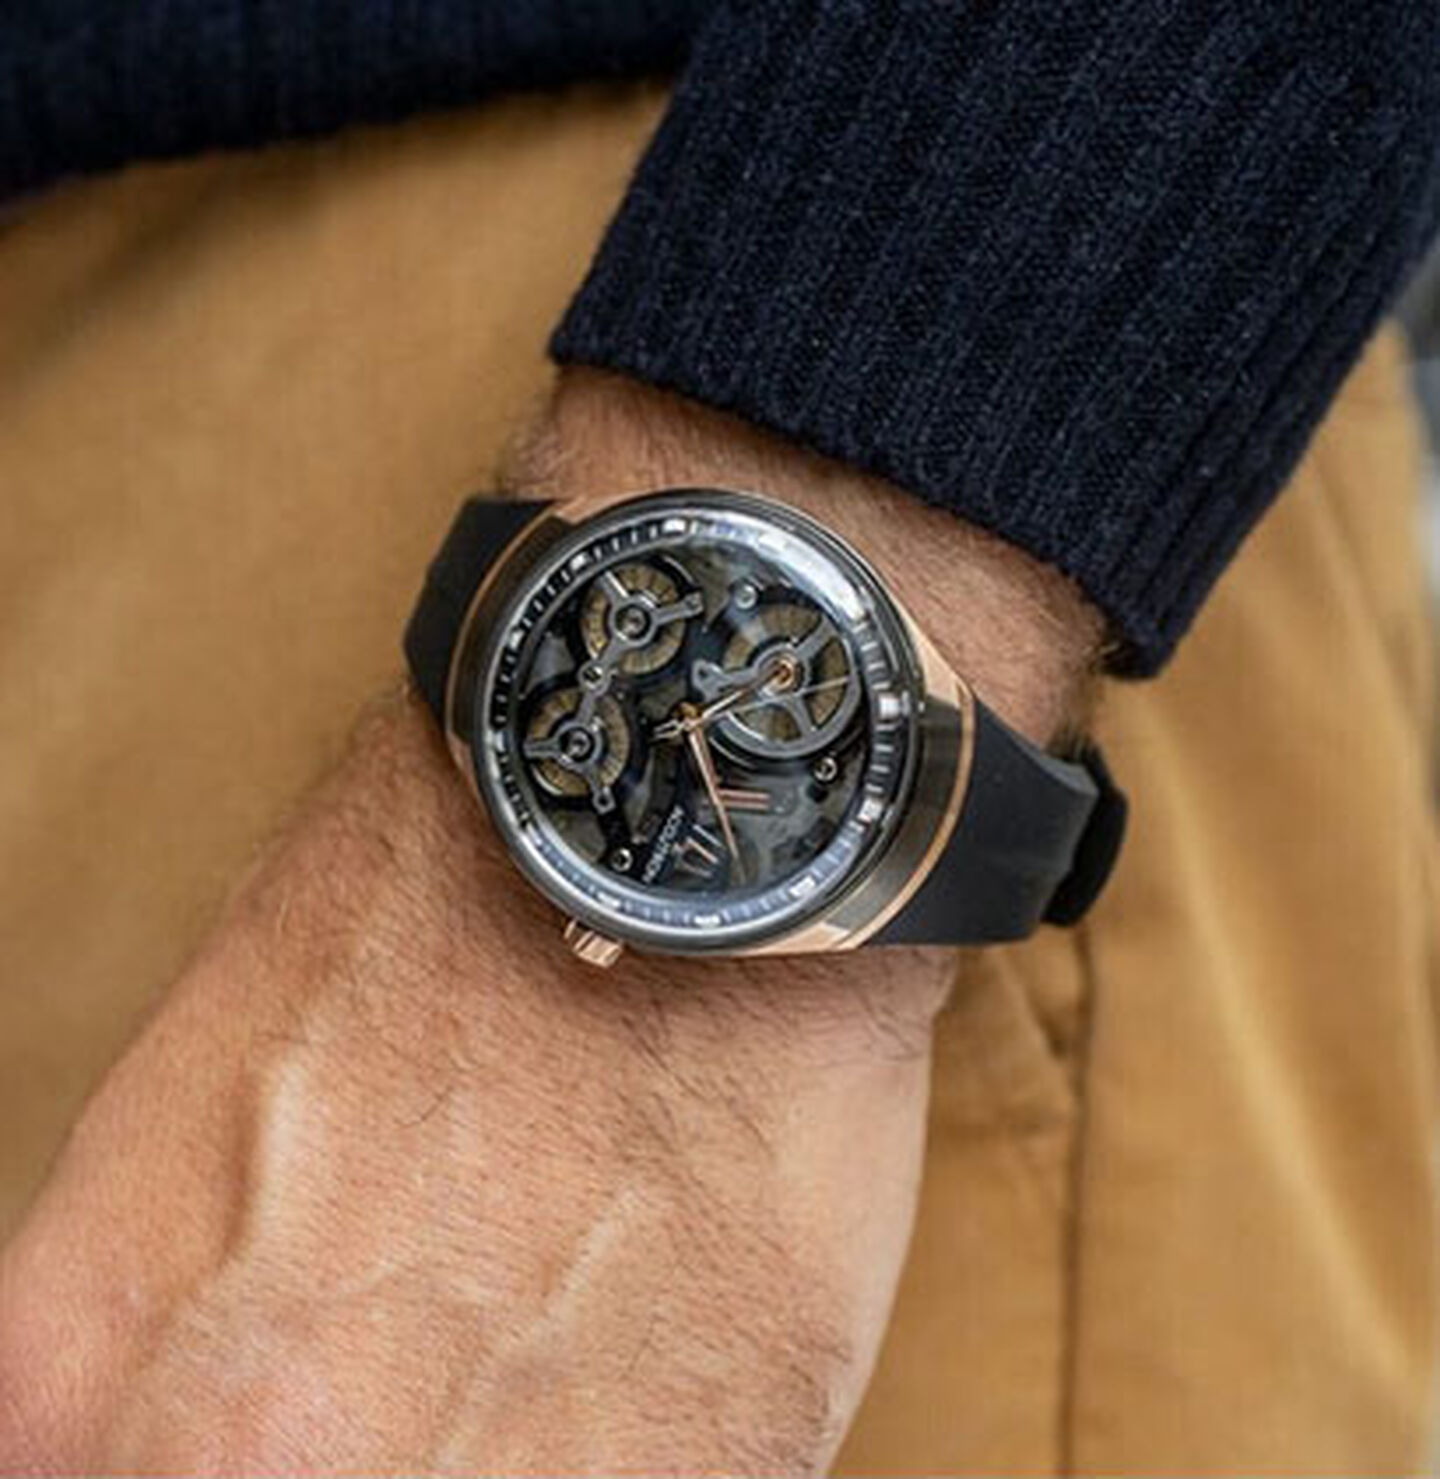 Accutron DNA watch on a man's wrist